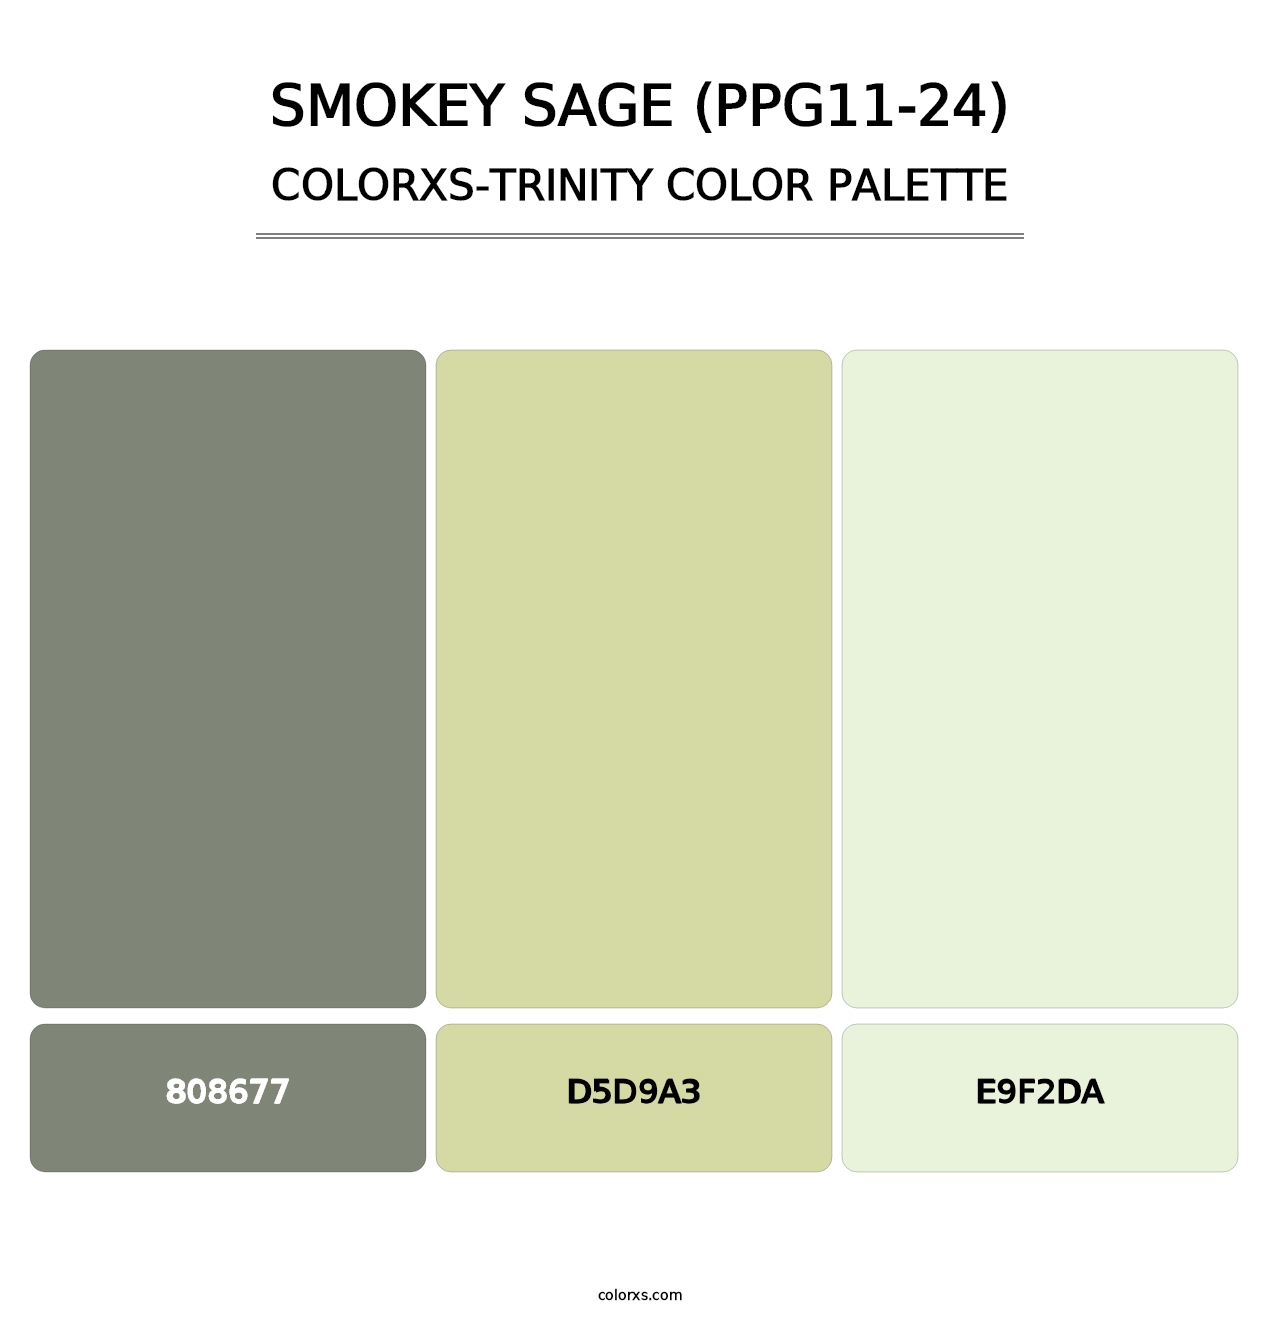 Smokey Sage (PPG11-24) - Colorxs Trinity Palette